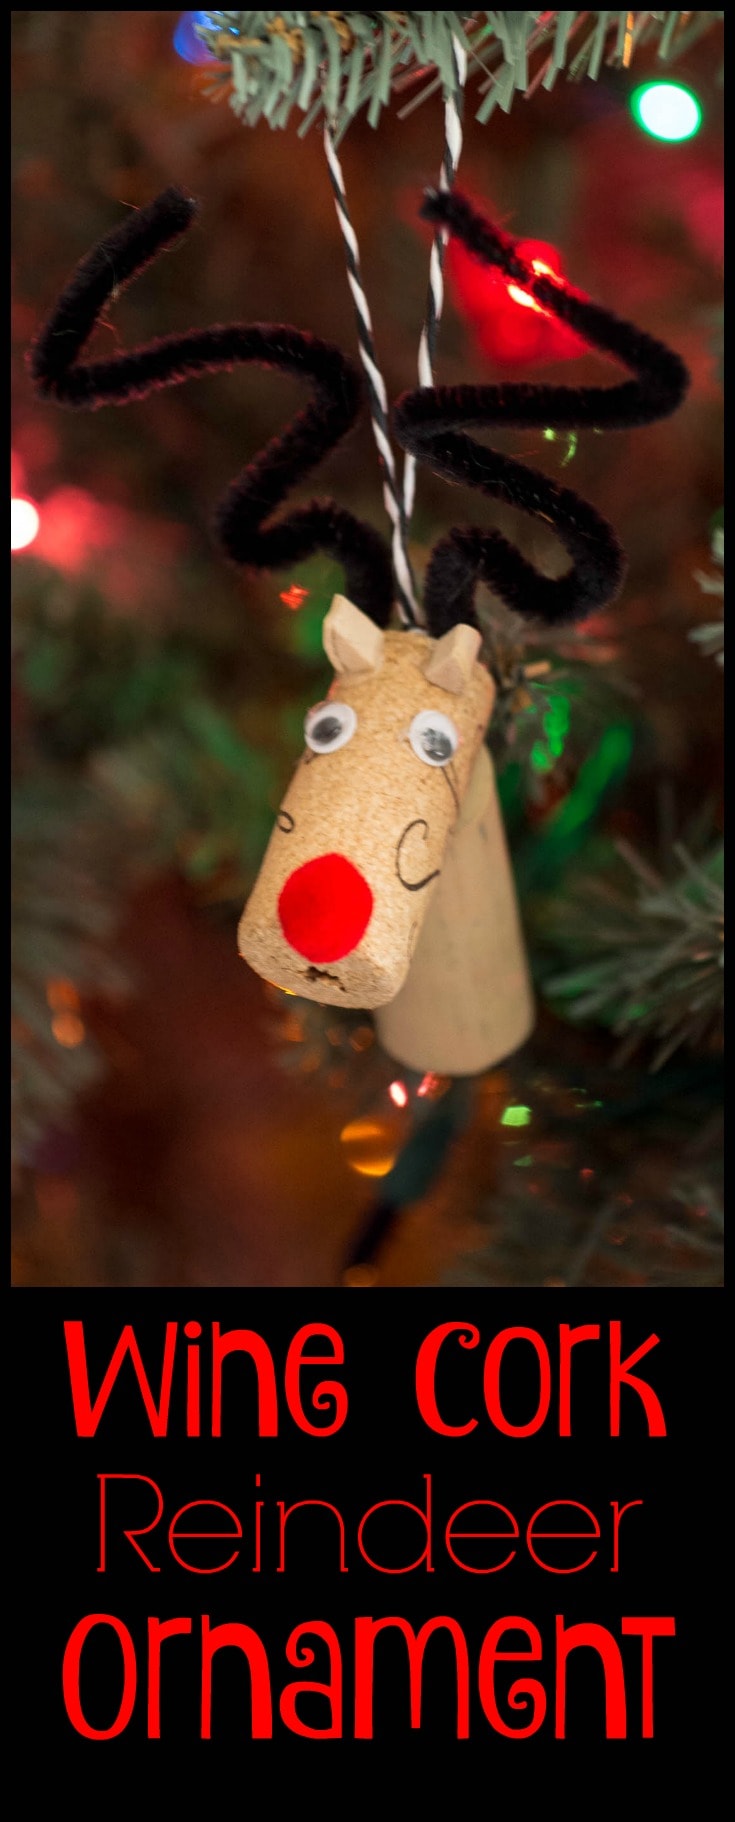 Wine cork reindeer ornament. (No changes made)